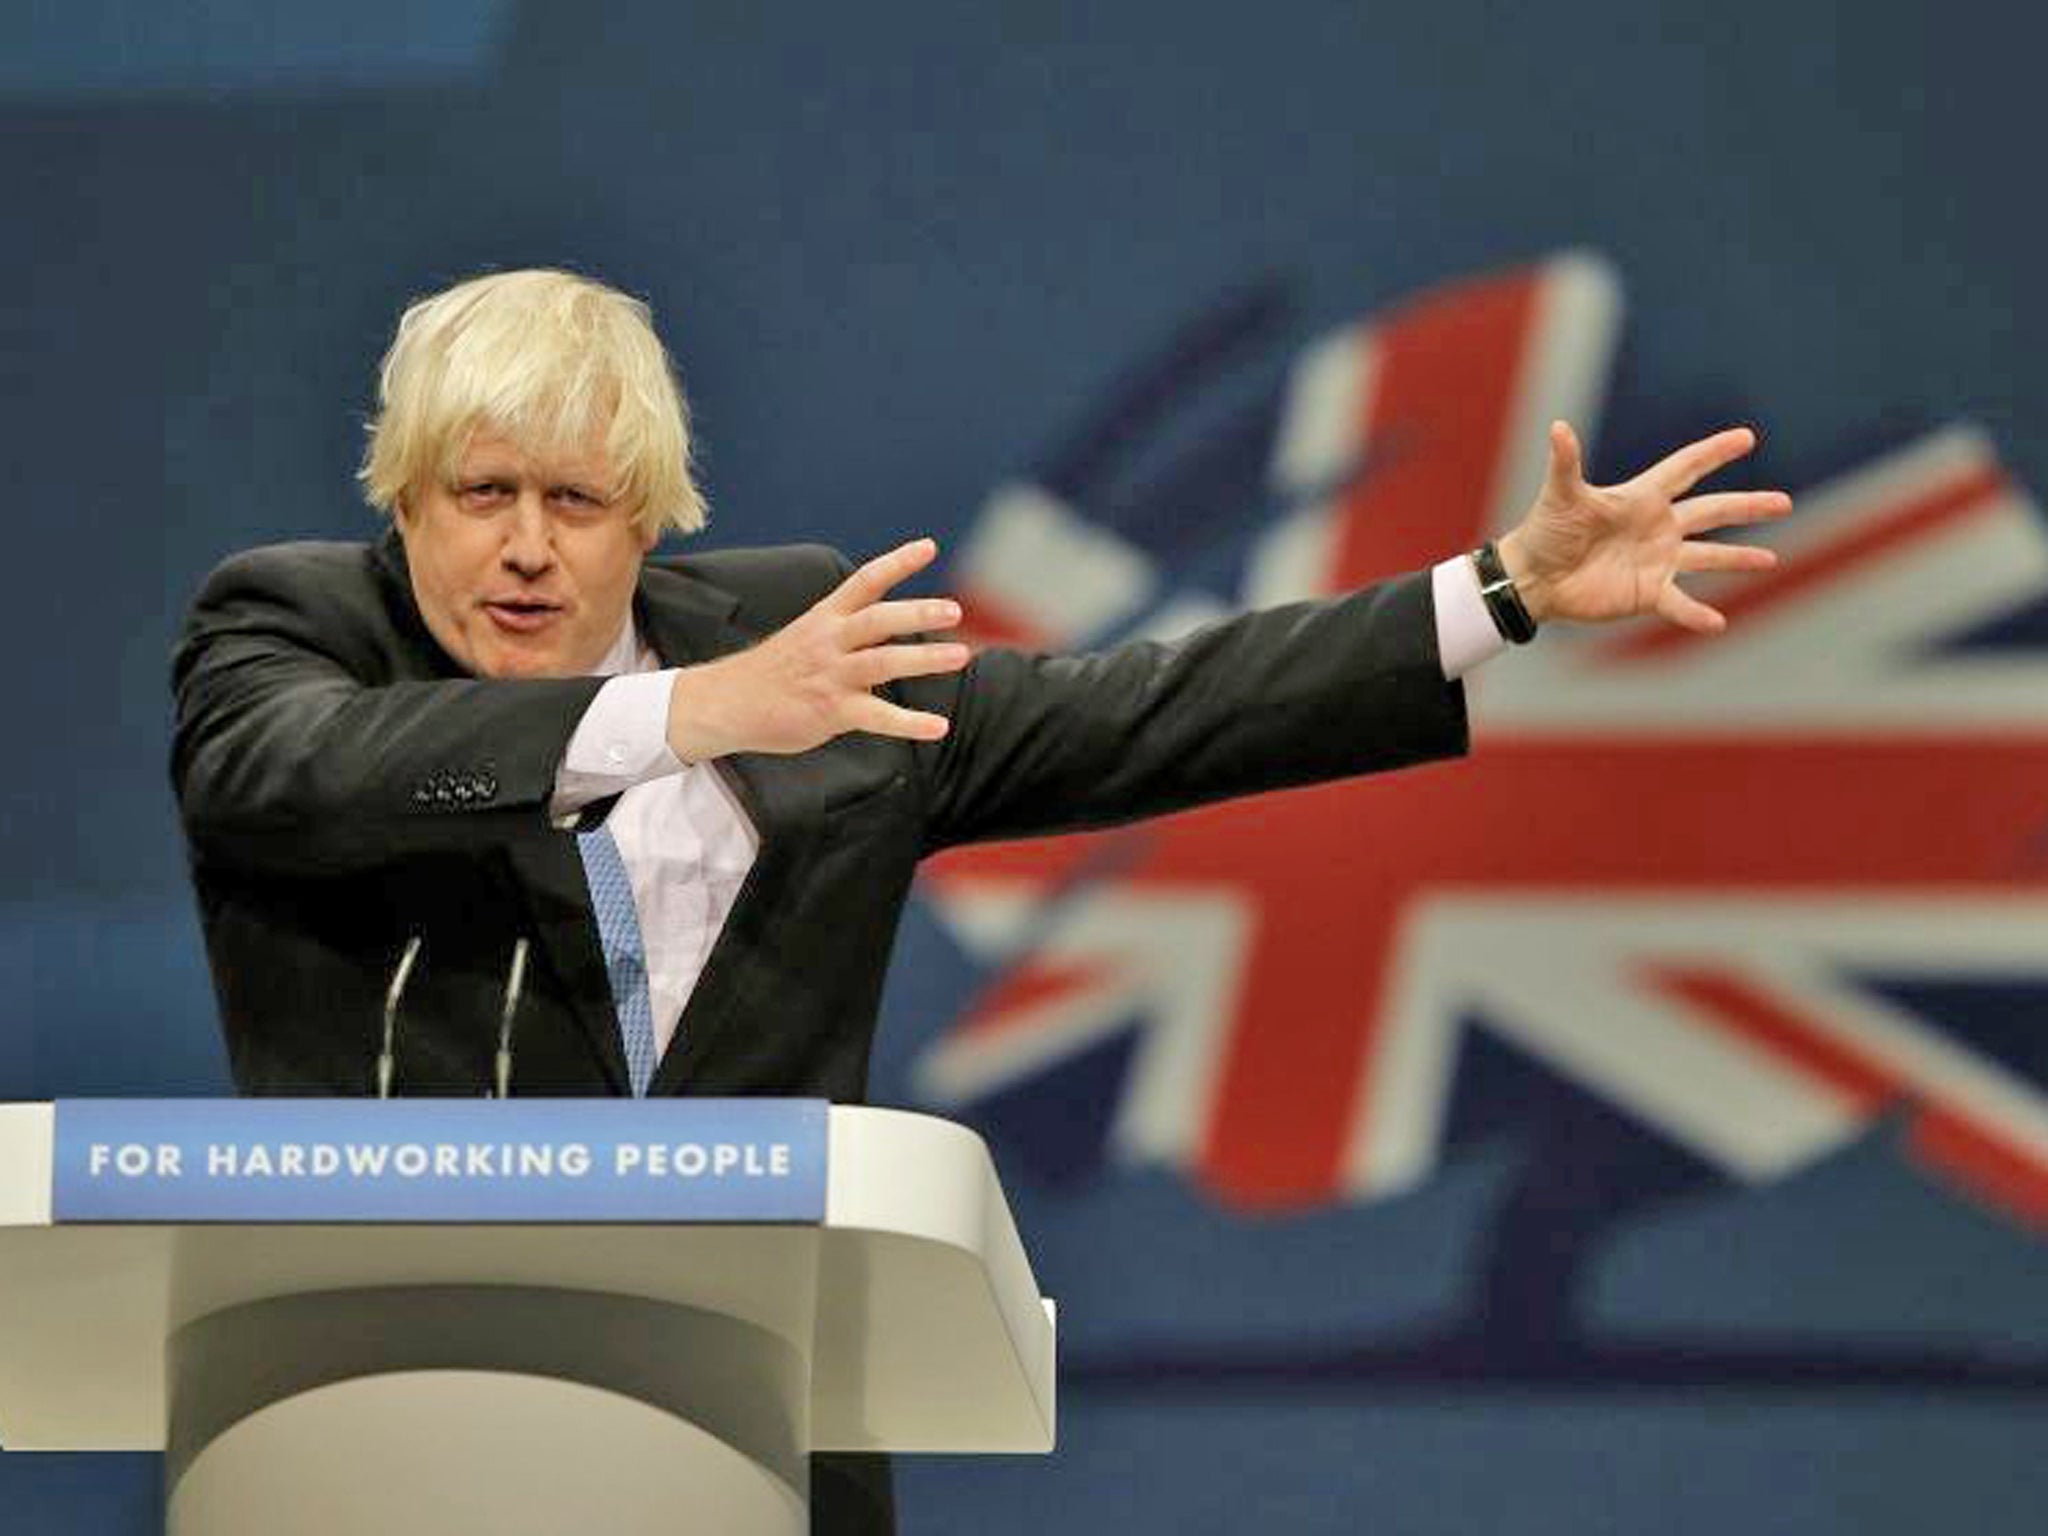 Boris delivered a broadly loyal address